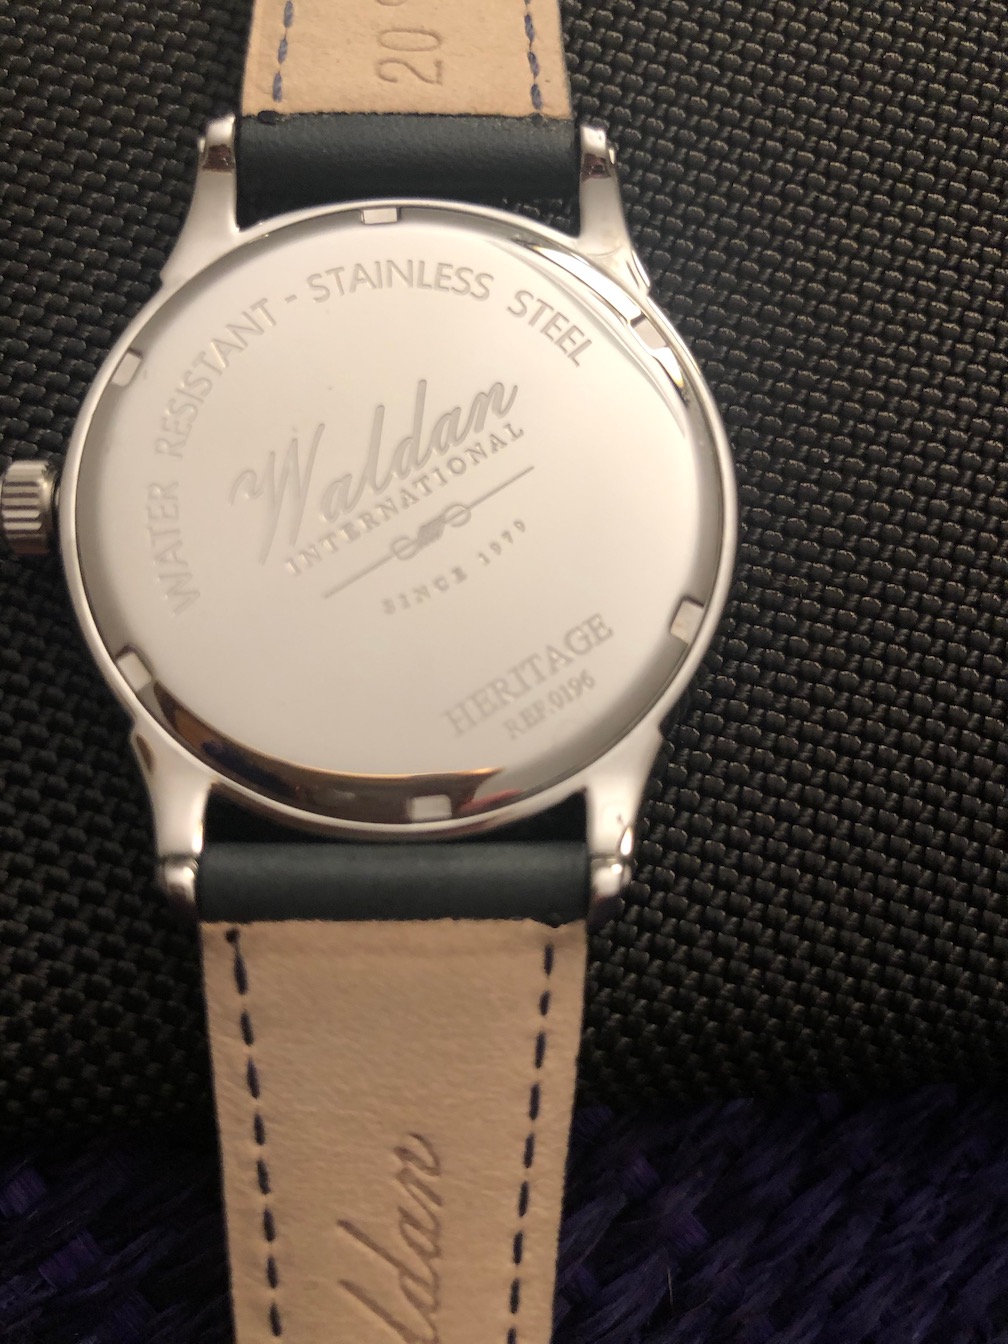 Waldan Heritage watches made in America